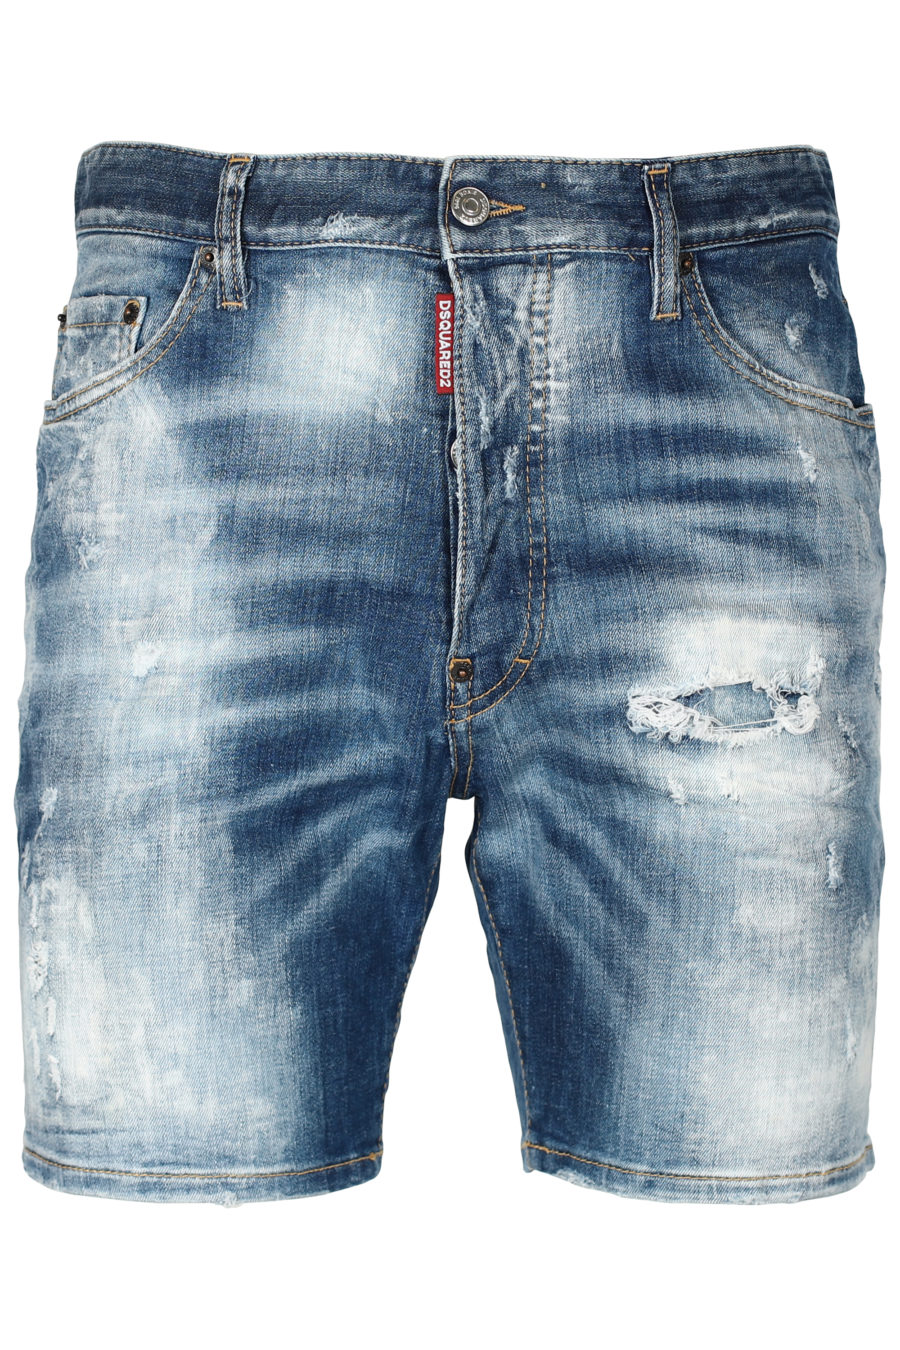 Pantalón corto "Marine short" azul claro - IMG 2661